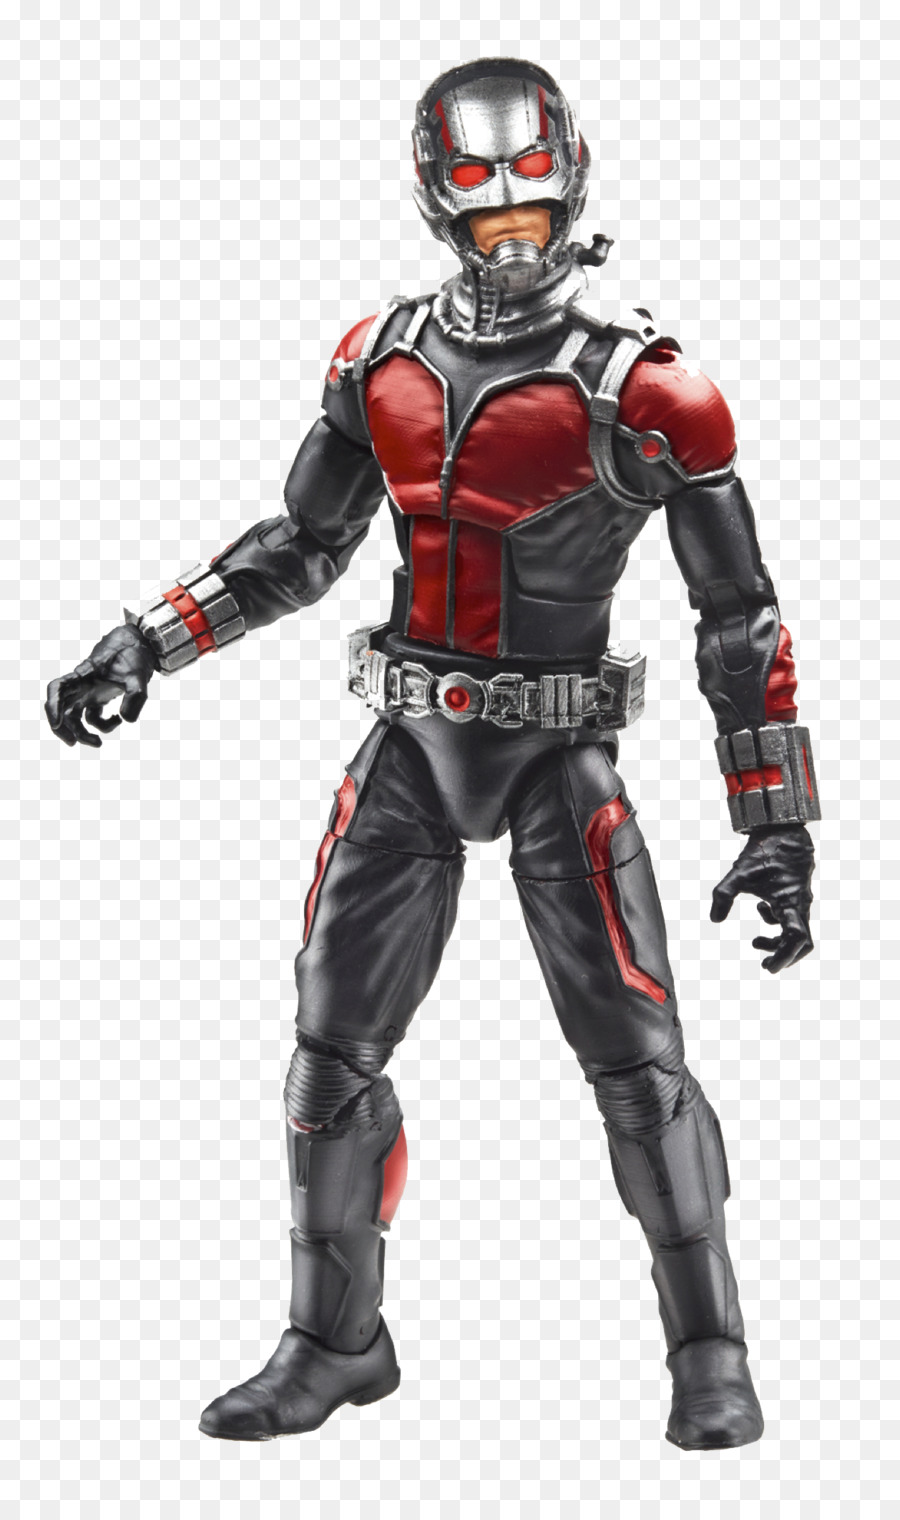 Hank Pym Ant-Man Iron Man Spider-Man Wasp - Ant-Man Transparent Background png download - 1258*2112 - Free Transparent Hank Pym png Download.